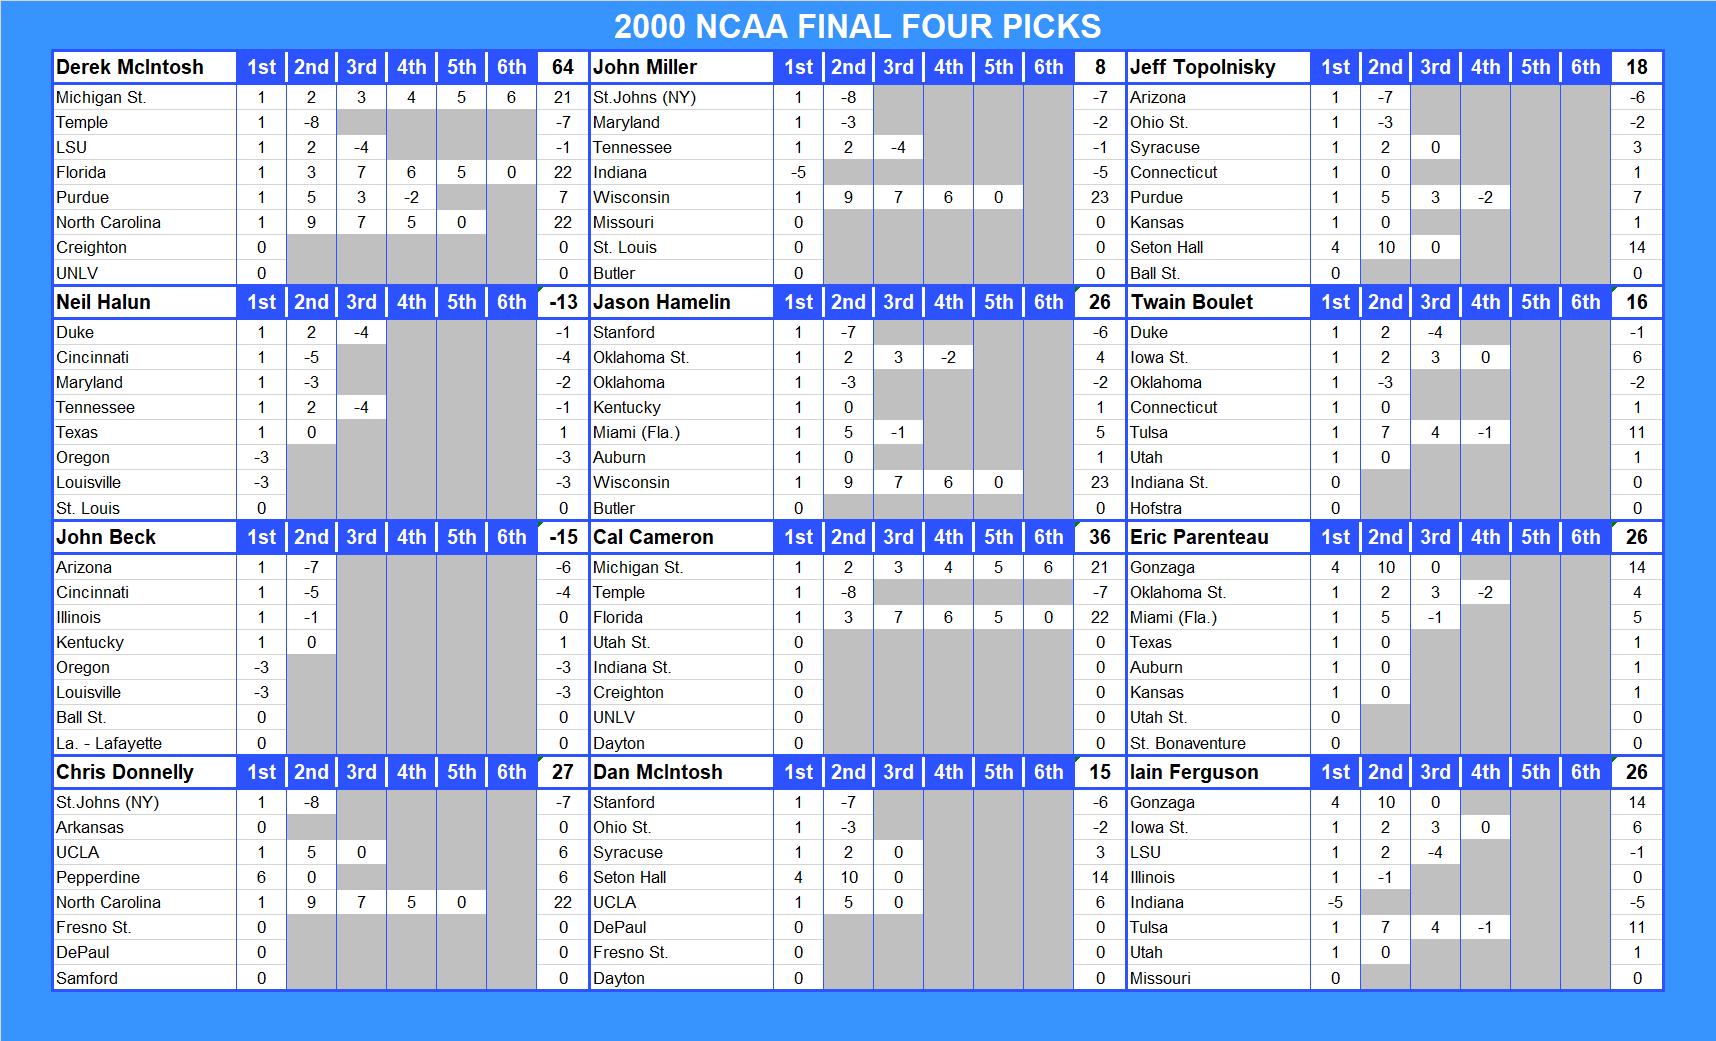 2000 NCAA Final Four Pool Picks